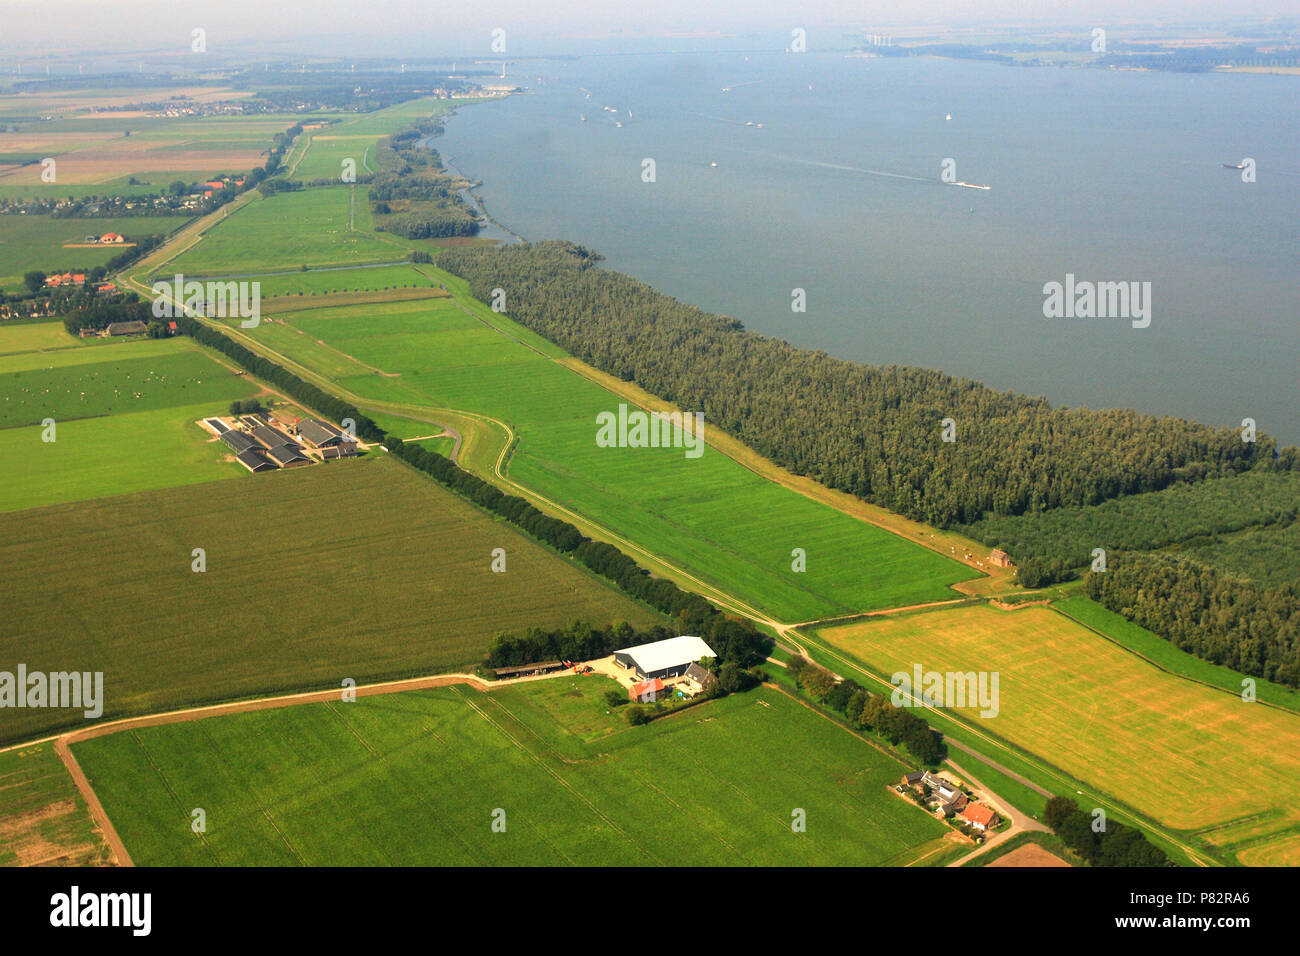 Luftaufnahme auf der Biesbosch, de Biesbosch vanuit de Lucht Stockfoto